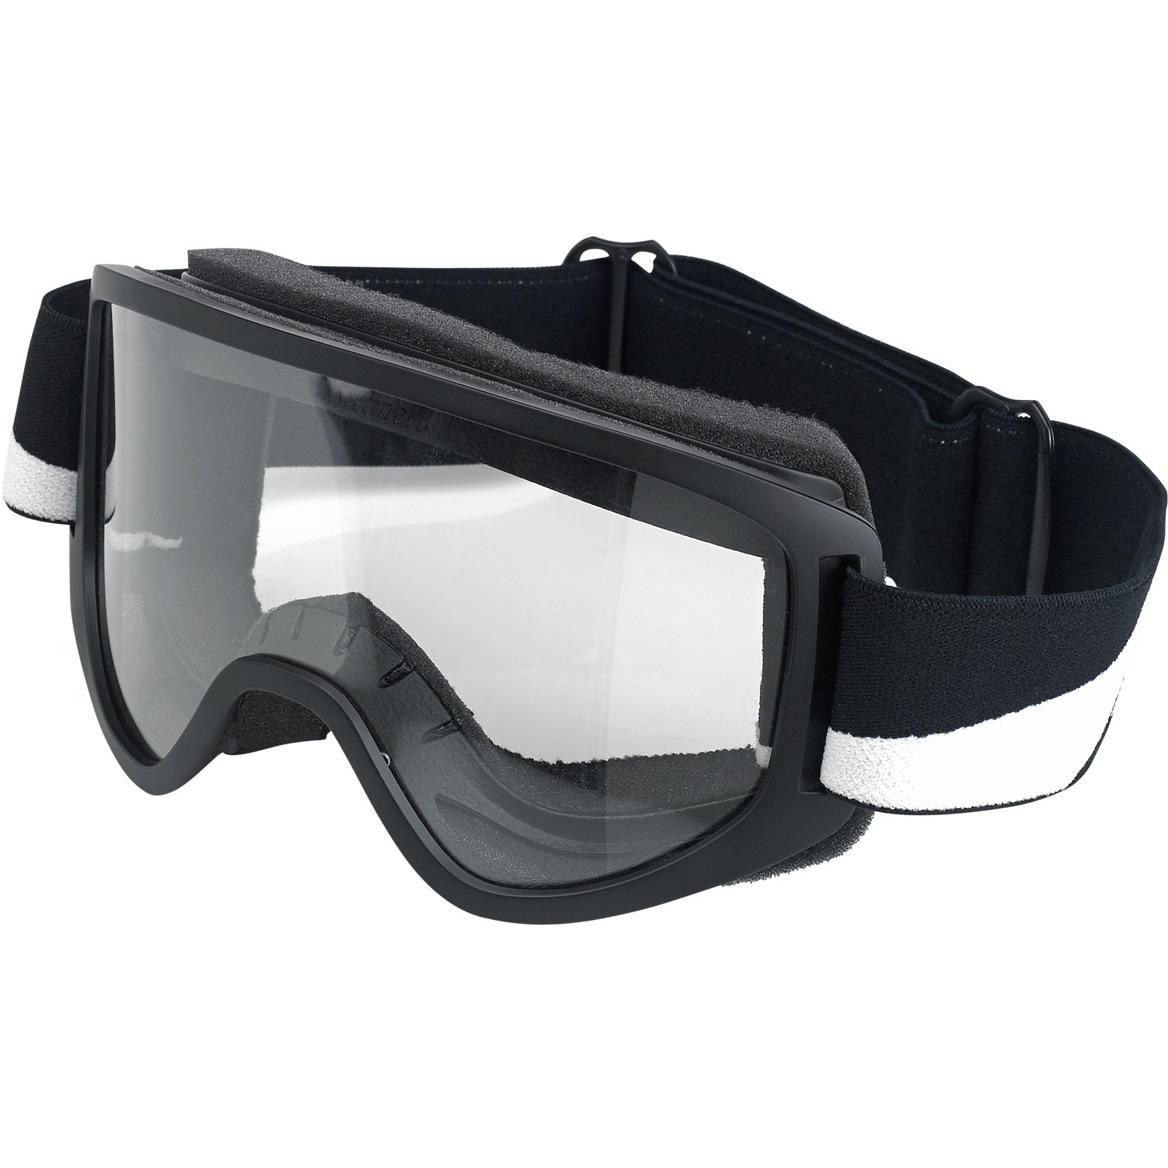 Biltwell Moto 2.0 Goggles — Bolts